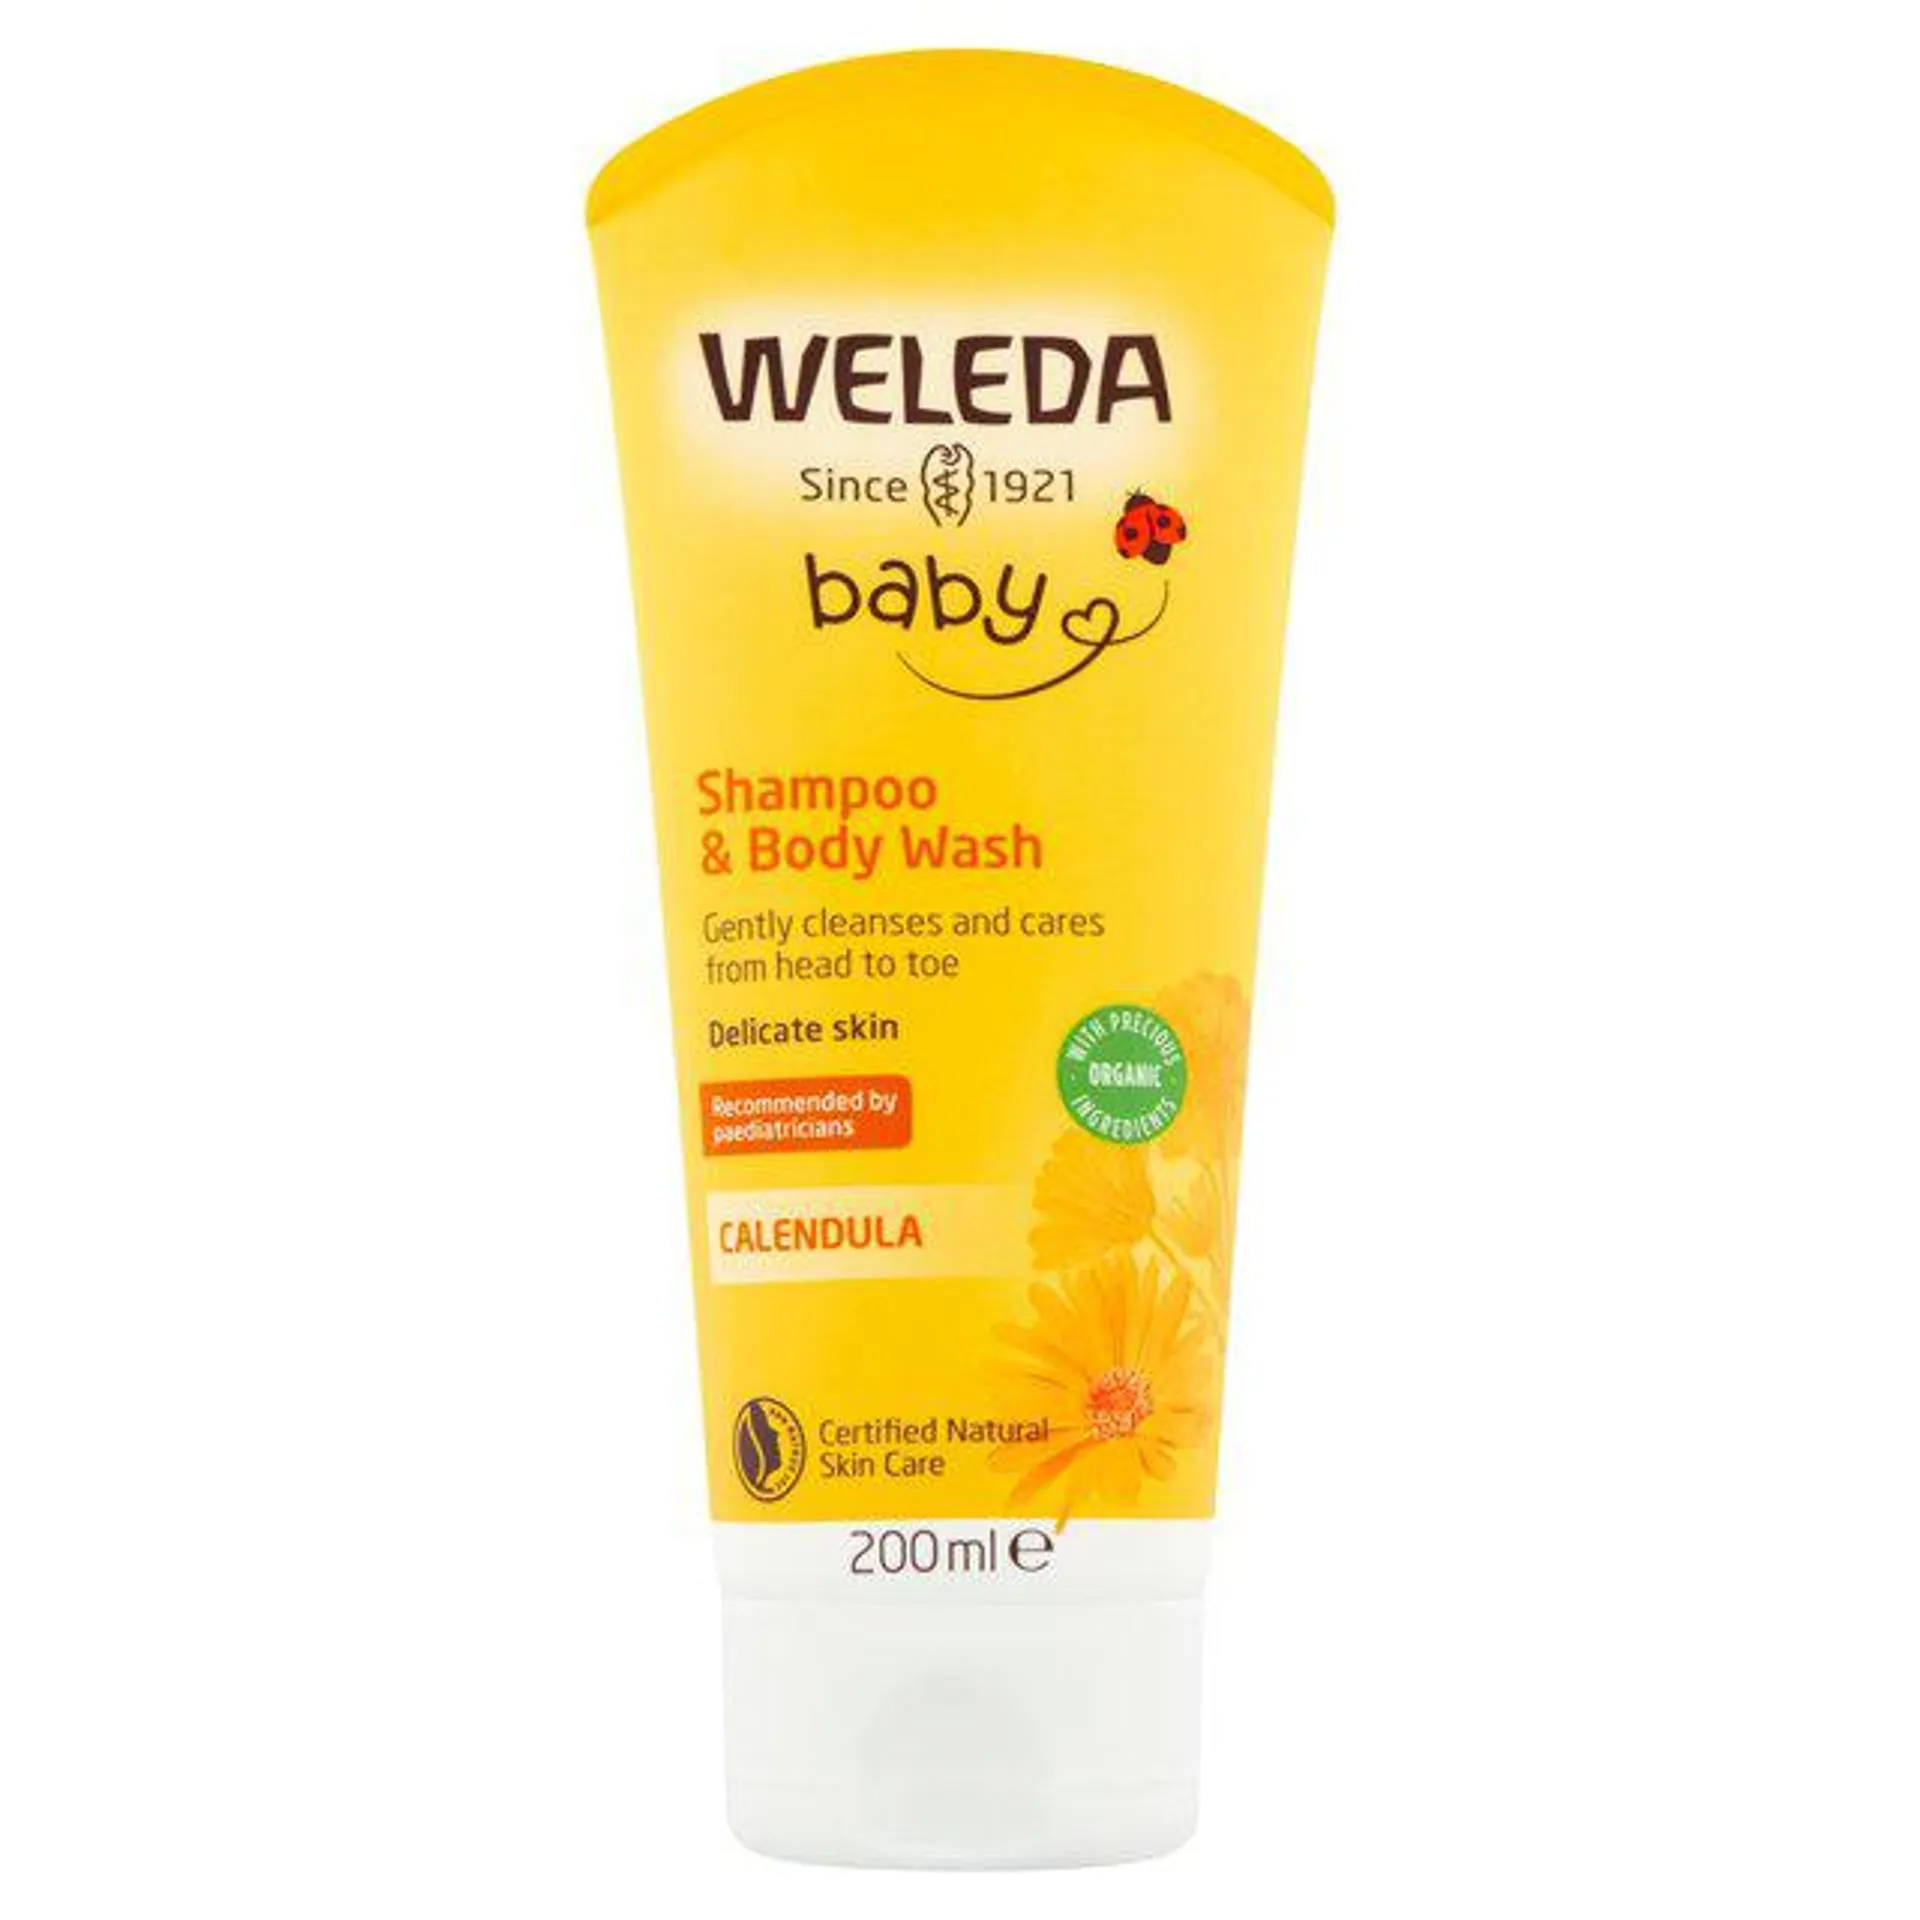 Weleda Baby Natural Calendula Vegan Shampoo & Body Wash 200ml